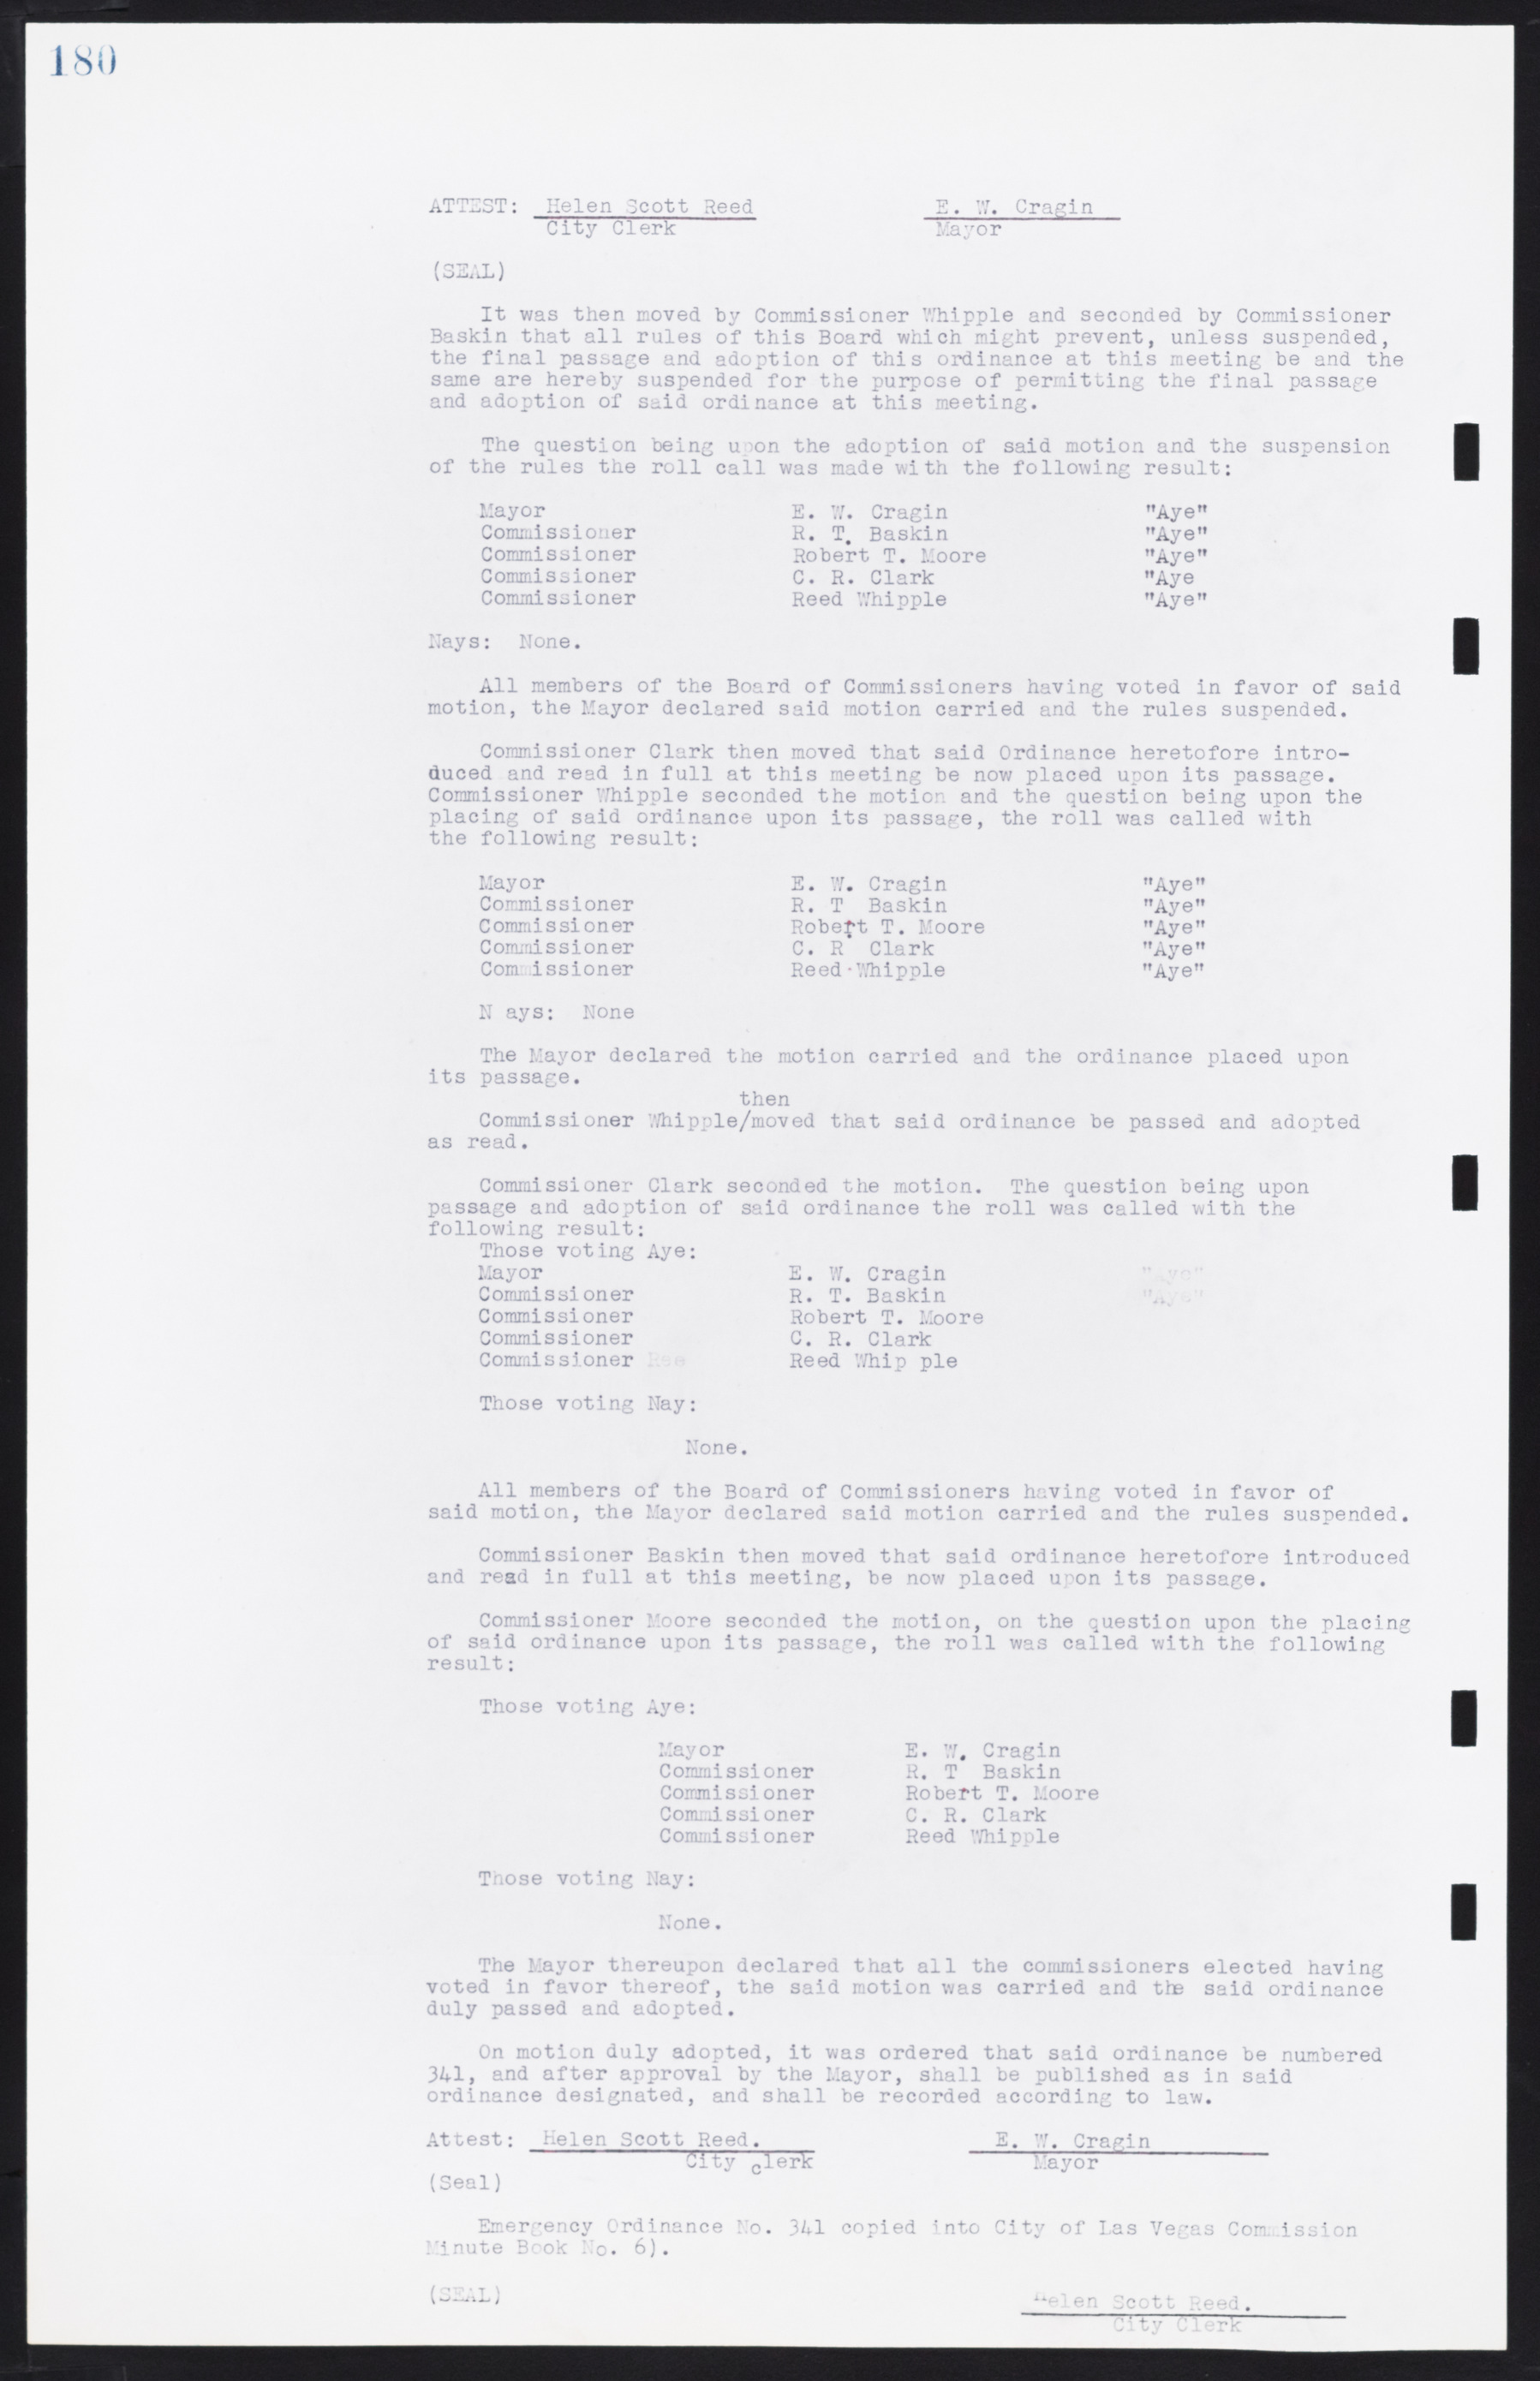 Las Vegas City Commission Minutes, January 7, 1947 to October 26, 1949, lvc000006-200